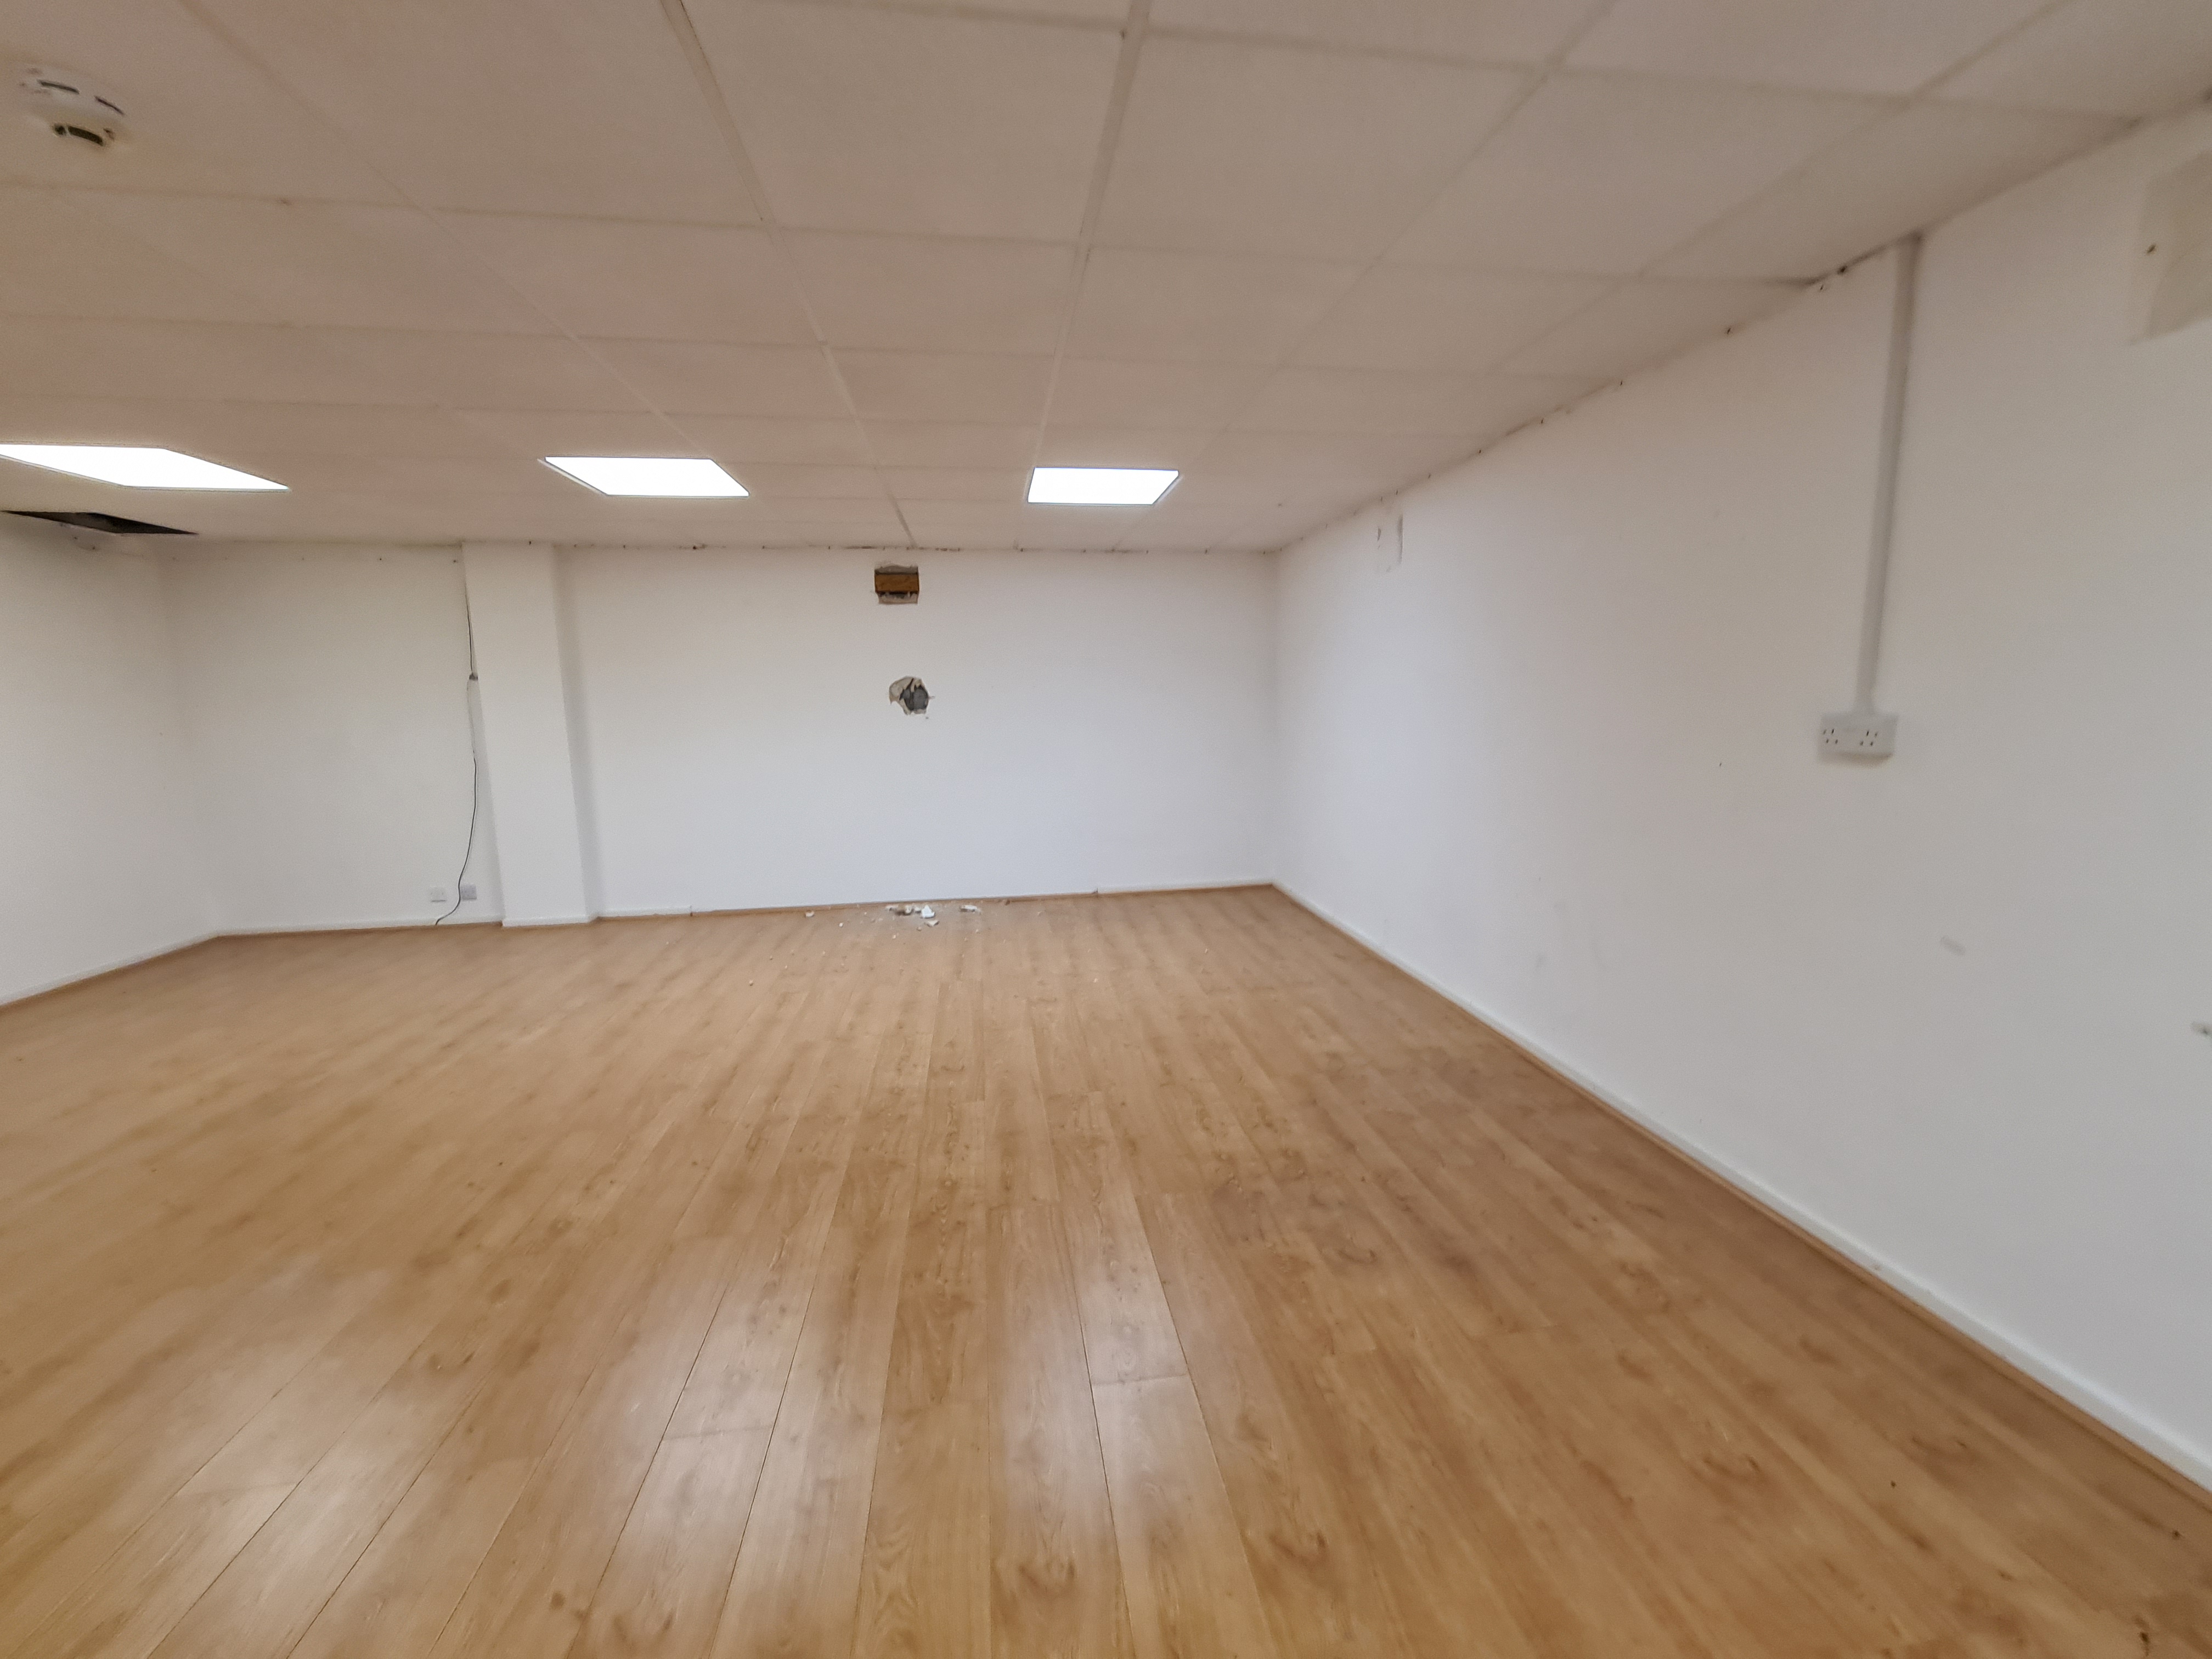 Empty room with a wooden floor